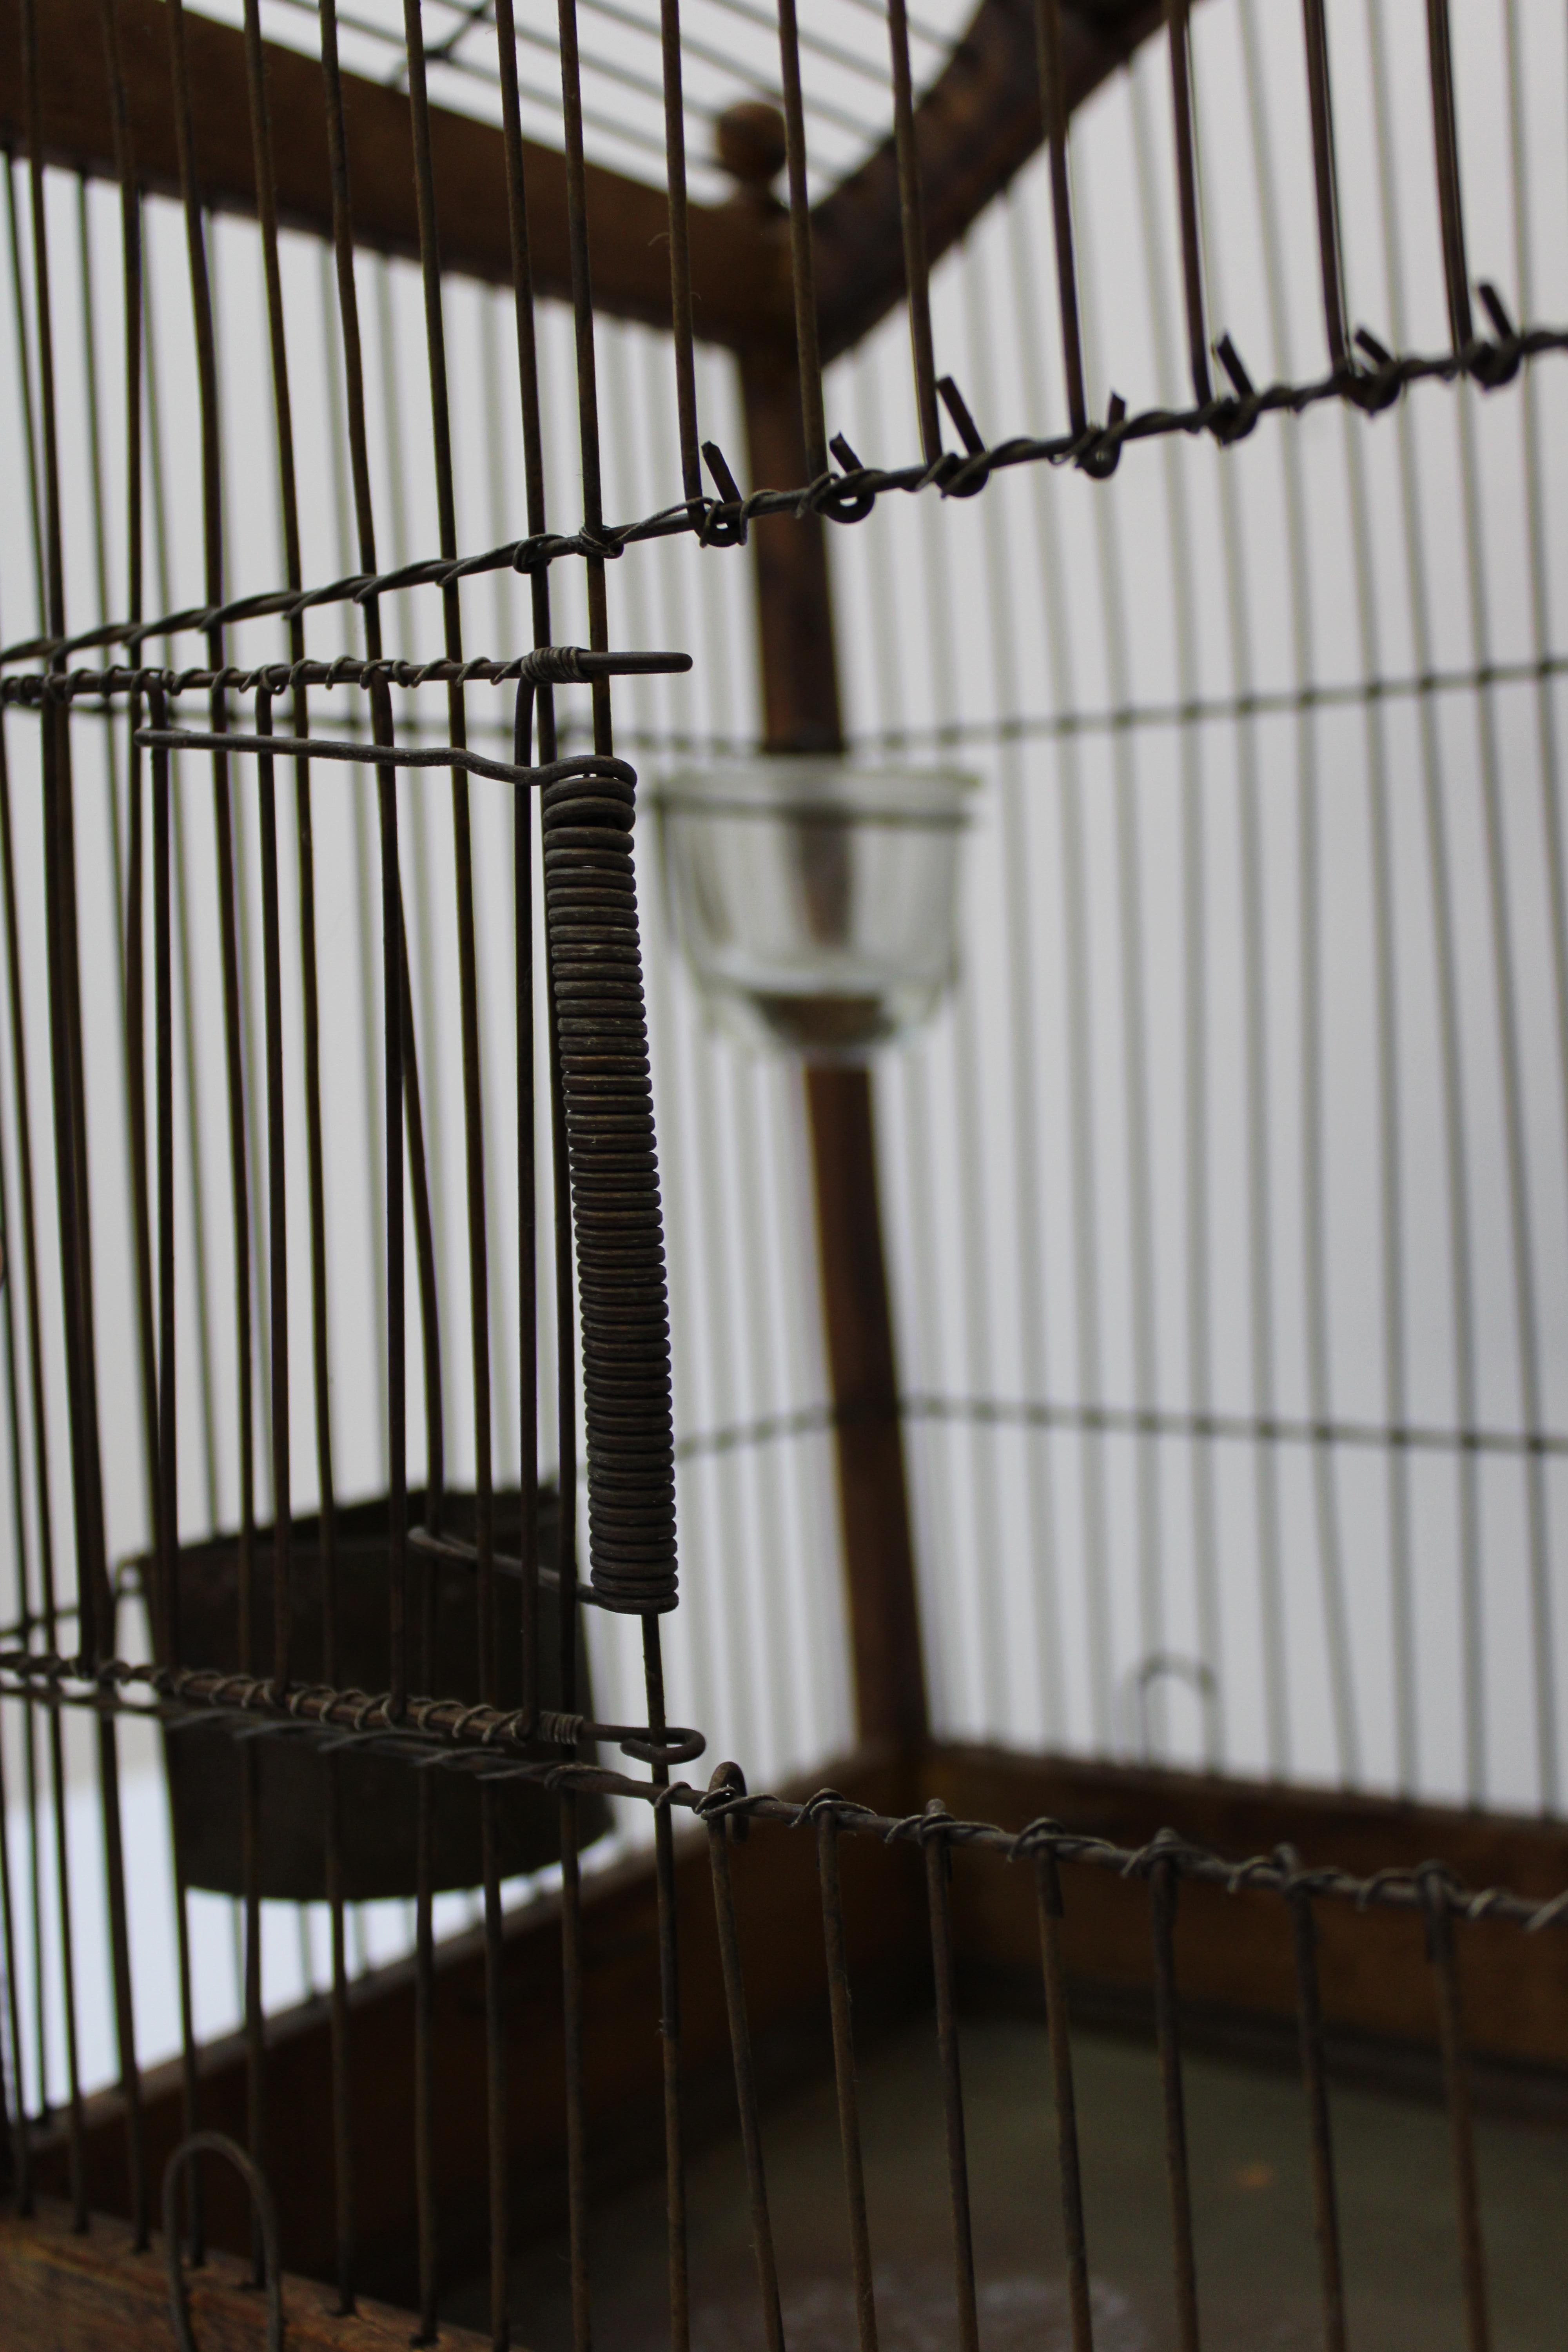 victorian style bird cage